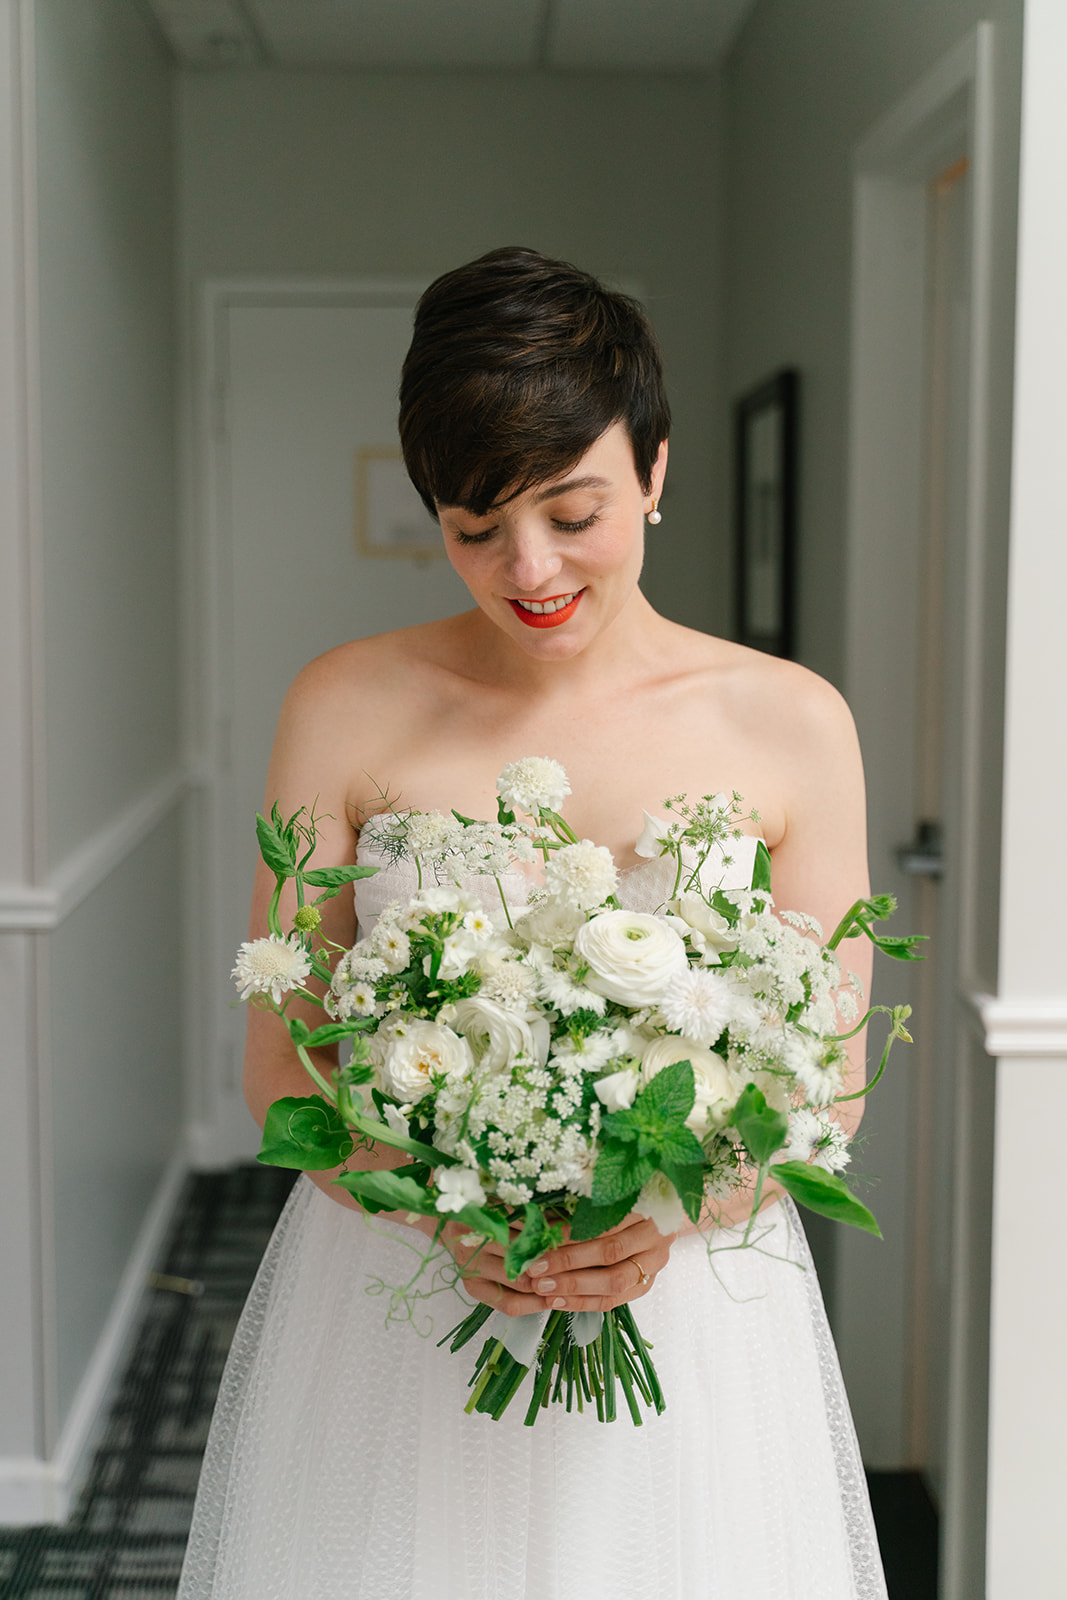 Bride with abundant greenery bouquet